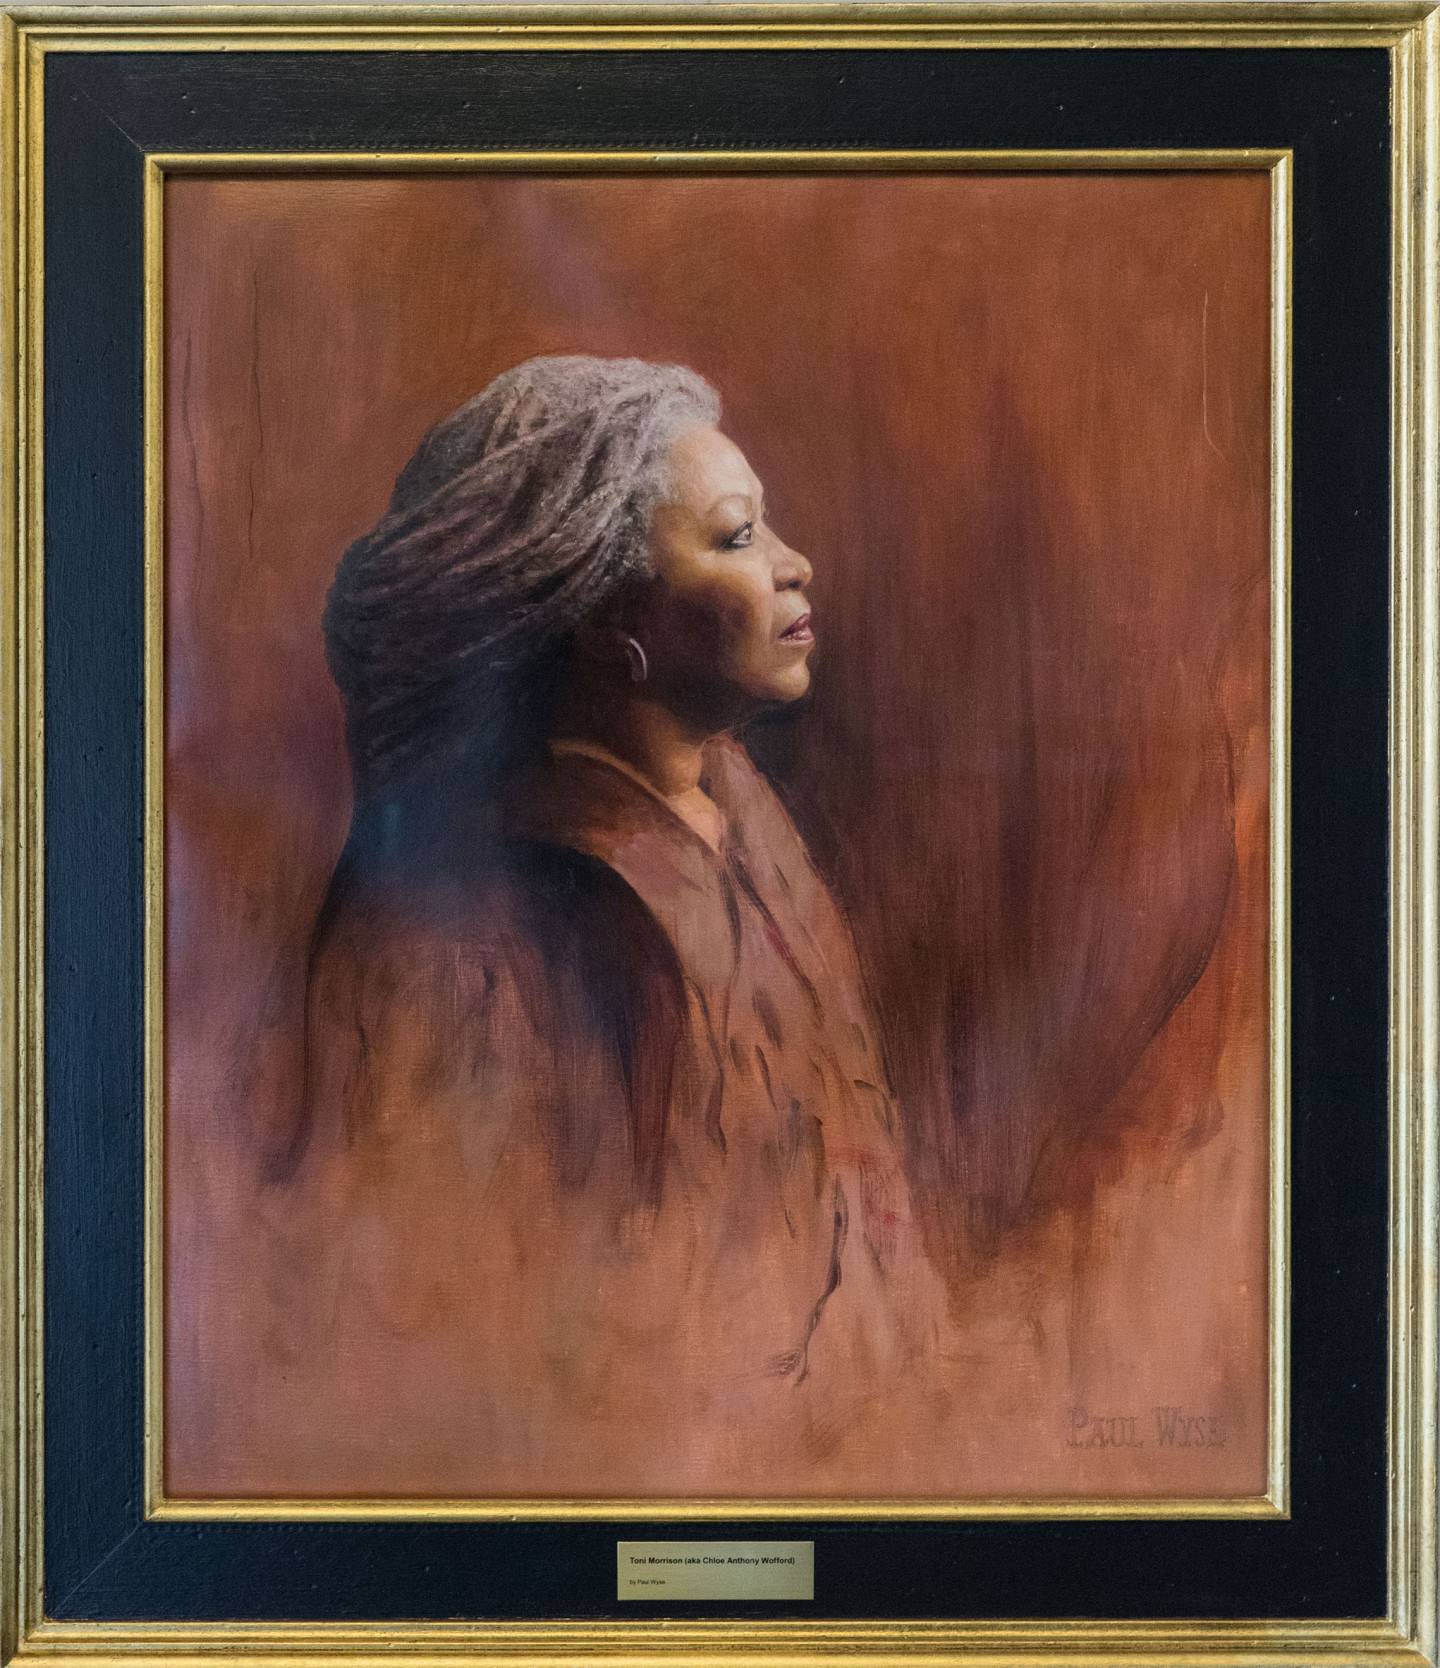 Framed portrait of Toni Morrison by Paul Wyse